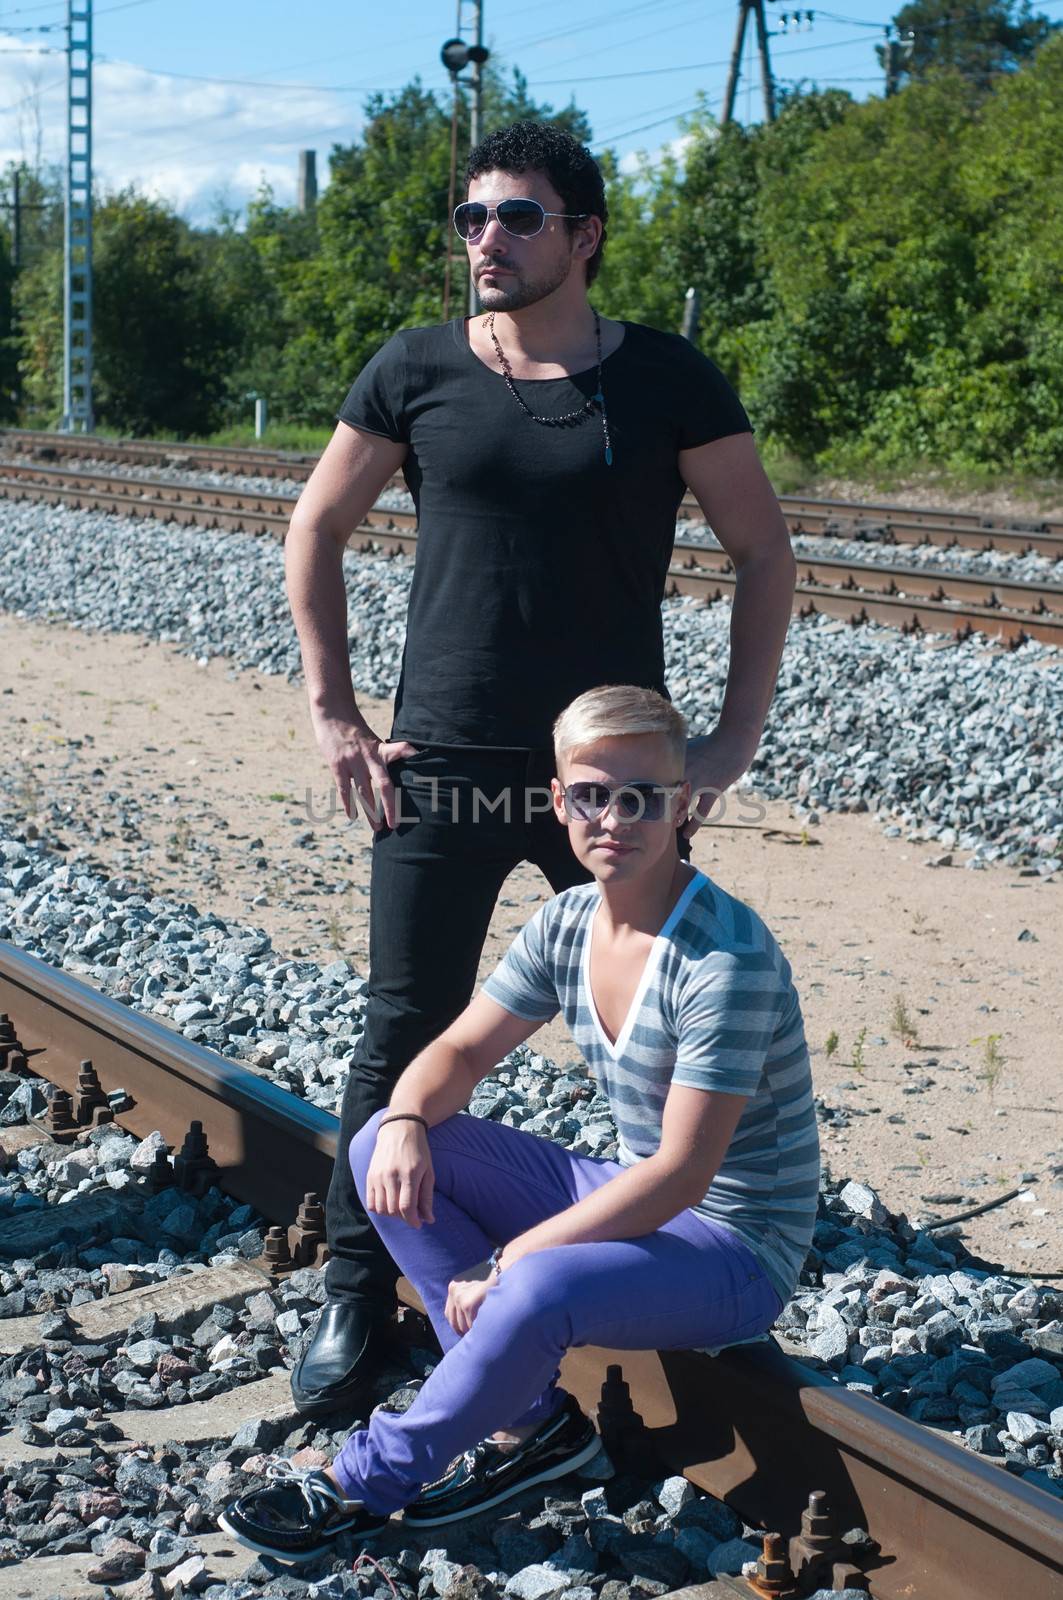 Shot of two men on train tracks, focus on man in black